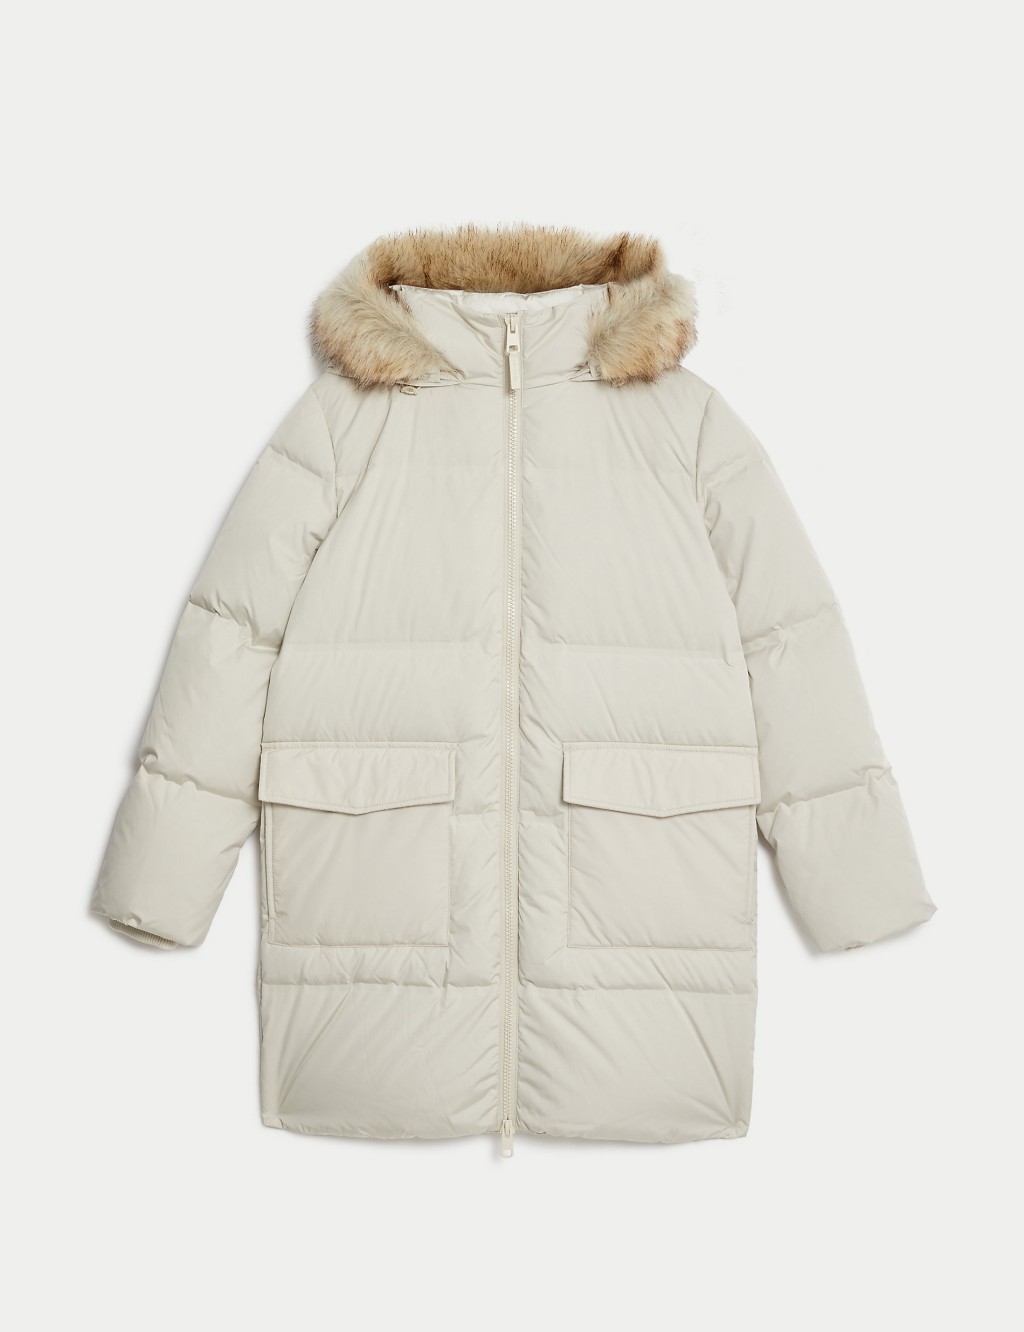 Stormwear™羽絨大衣/$1,790/MS，現於馬莎選購外套享75折，折後買滿$1,200，再有88折。